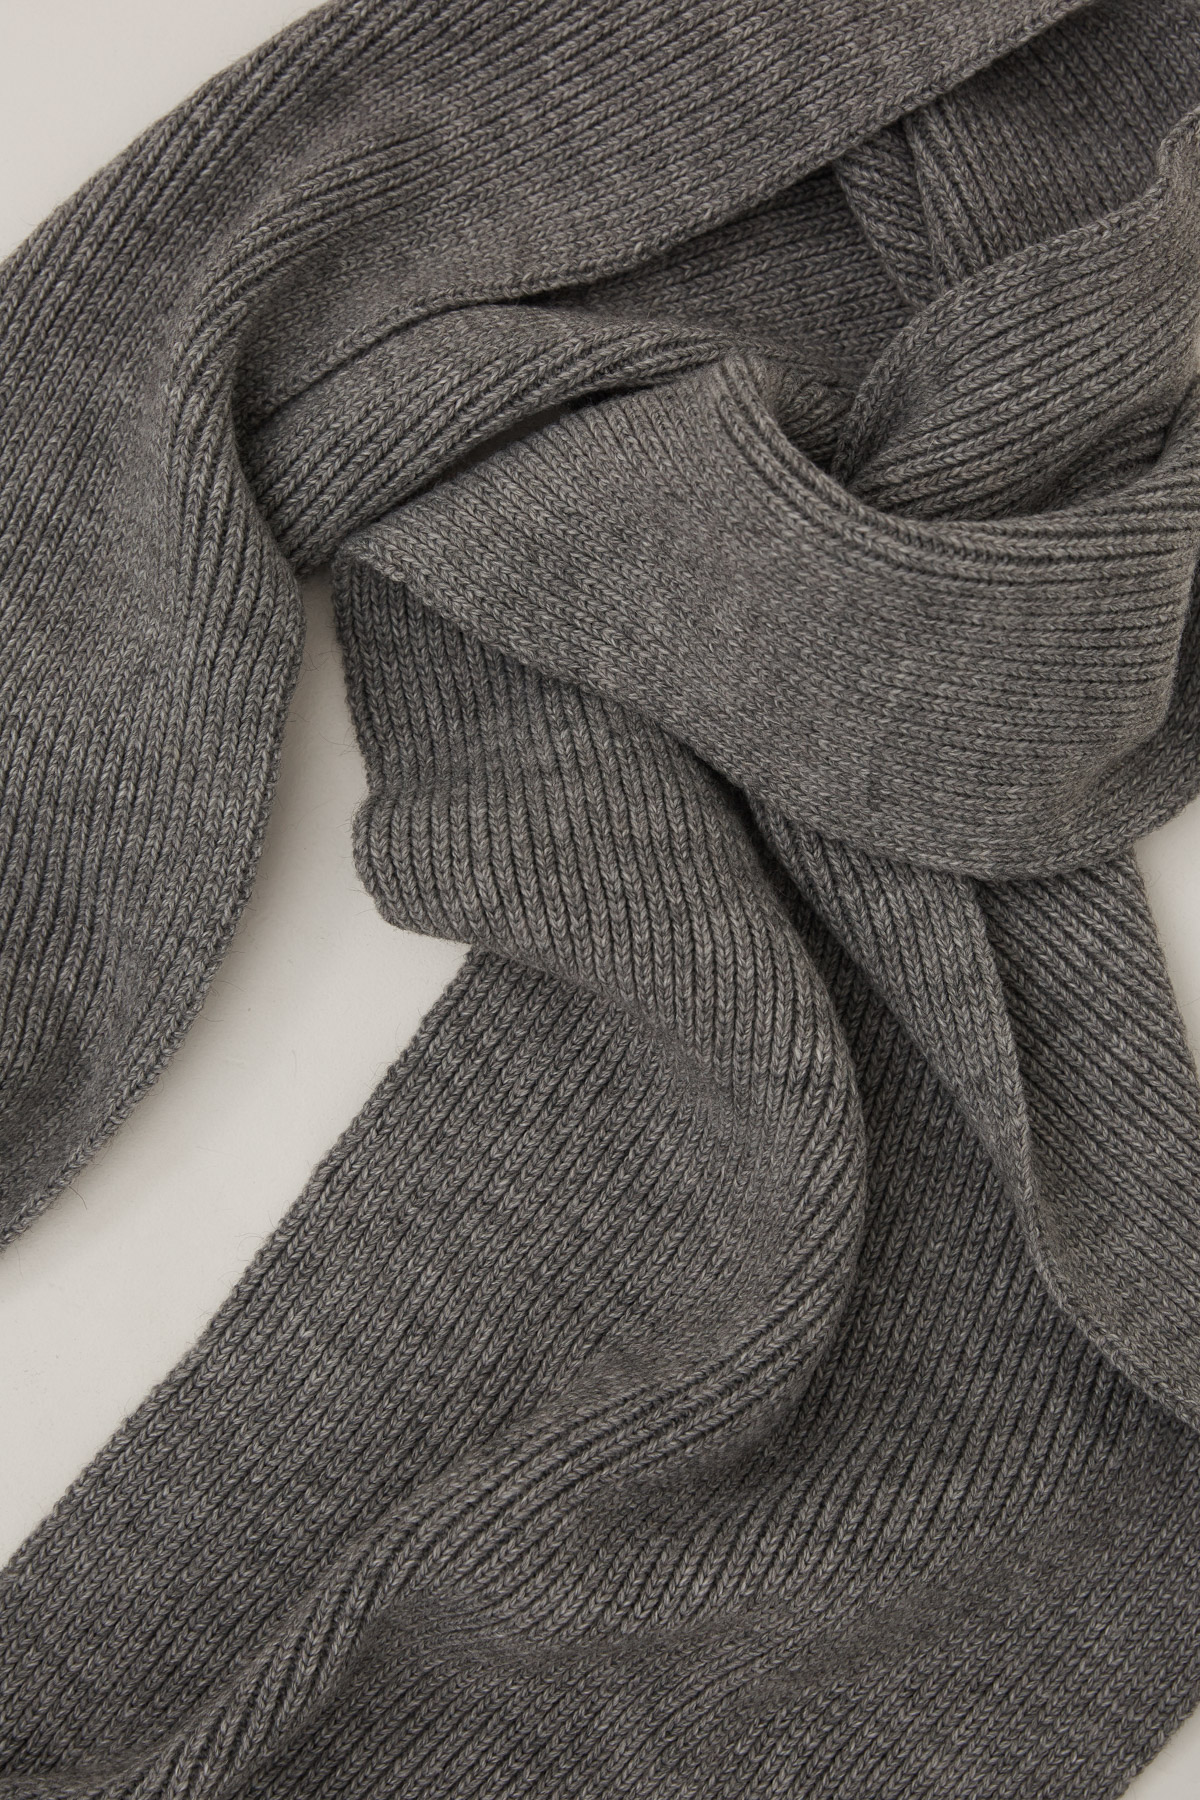 Knitted woolen grey scarf, photo 6